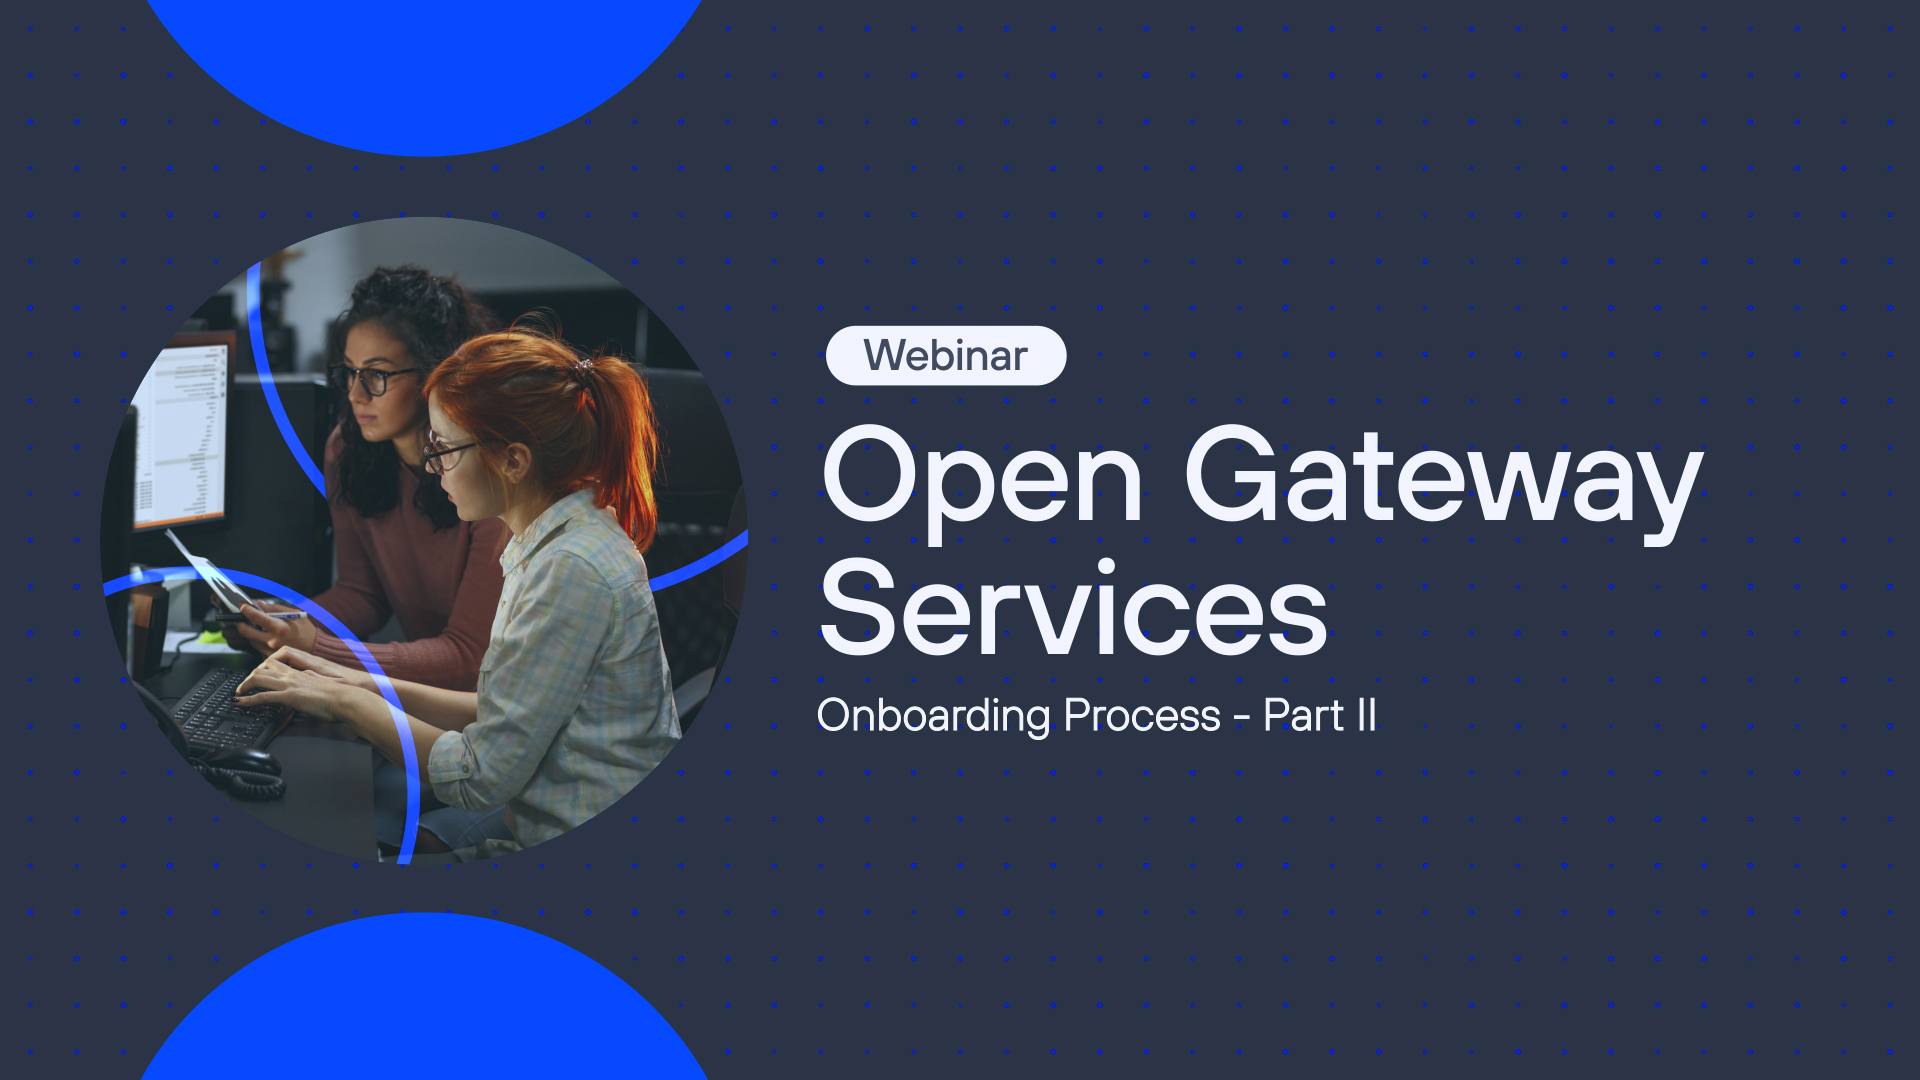 Open Gateway services onboarding proccess. Part 2.